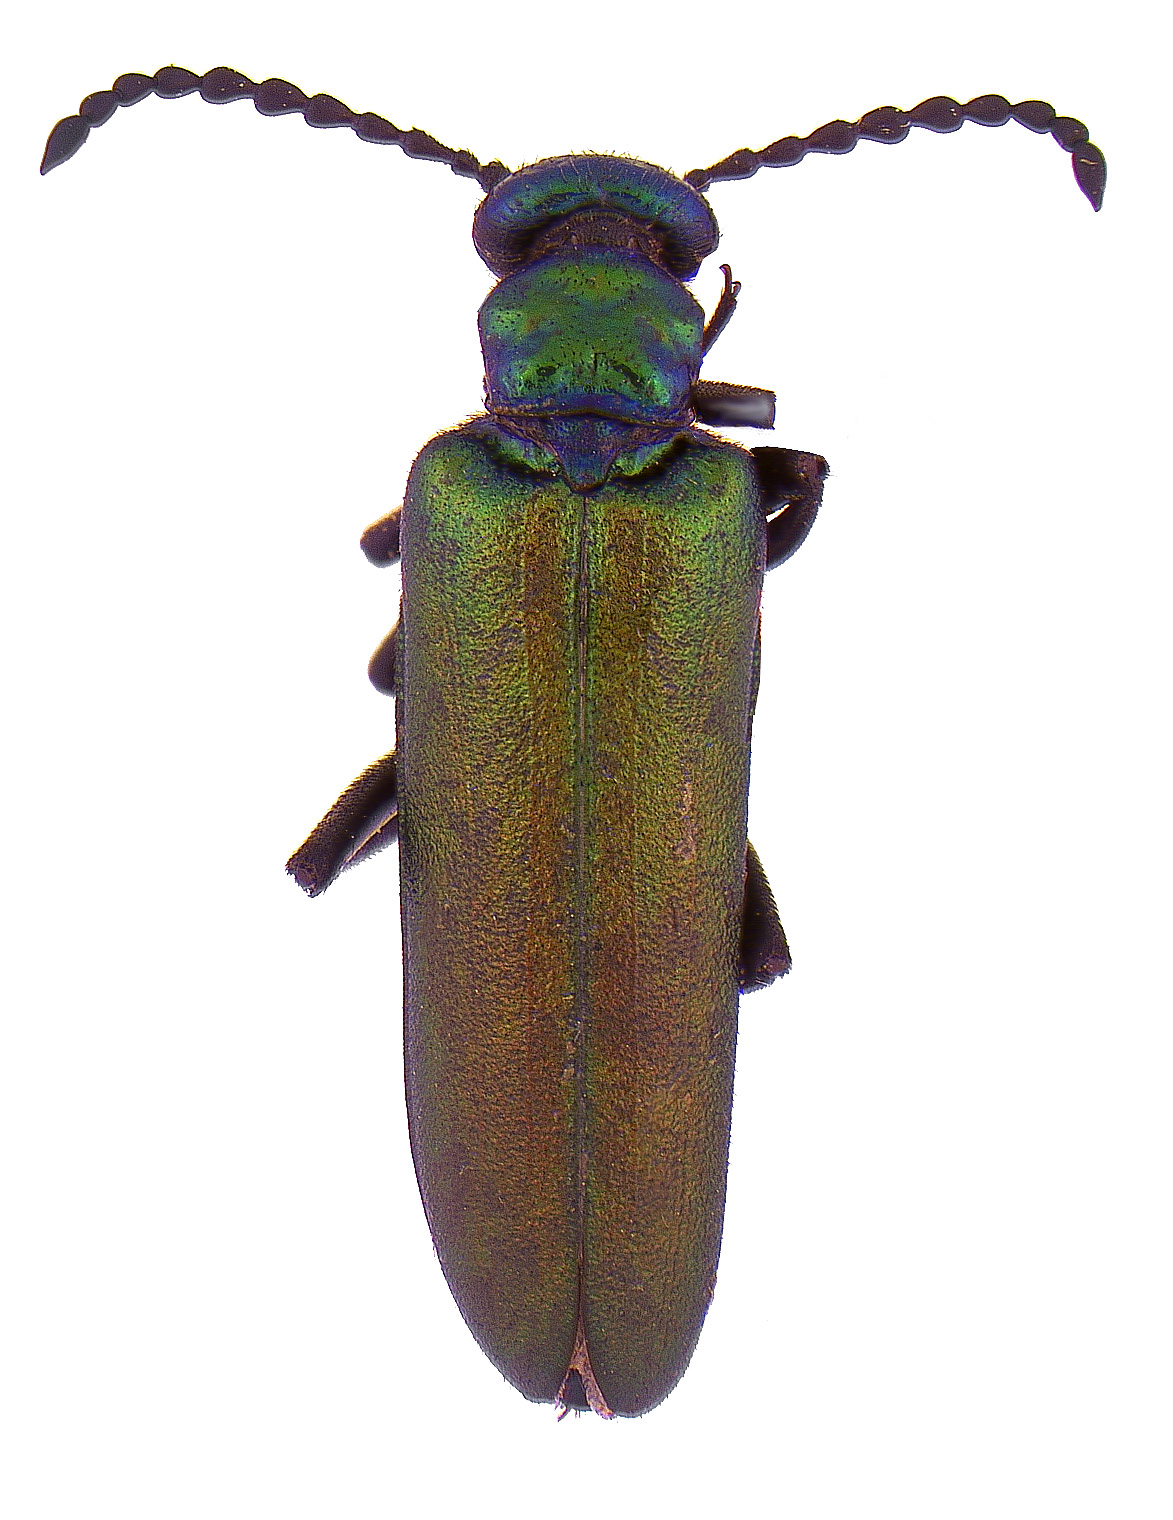 #10 Nuttall blister beetle